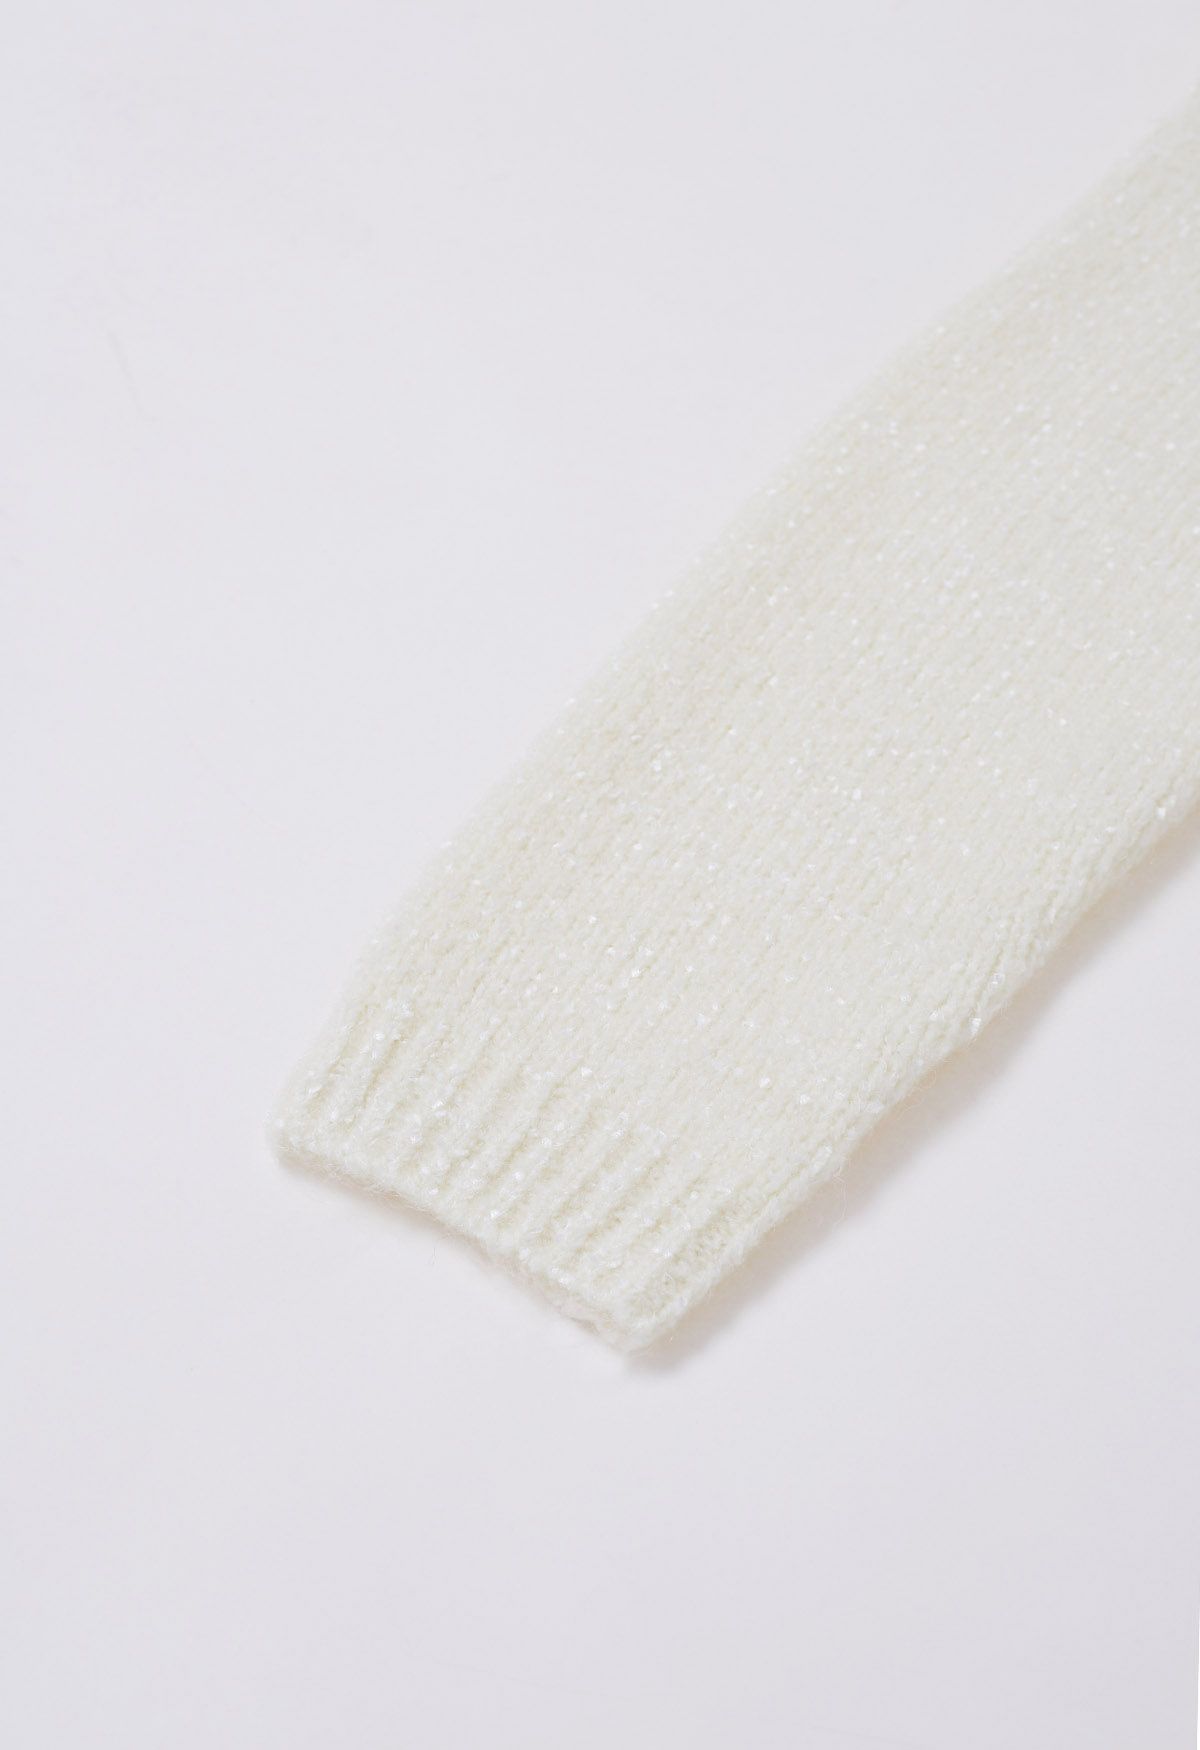 Drop Shoulder Rib Edge Knit Sweater in Cream